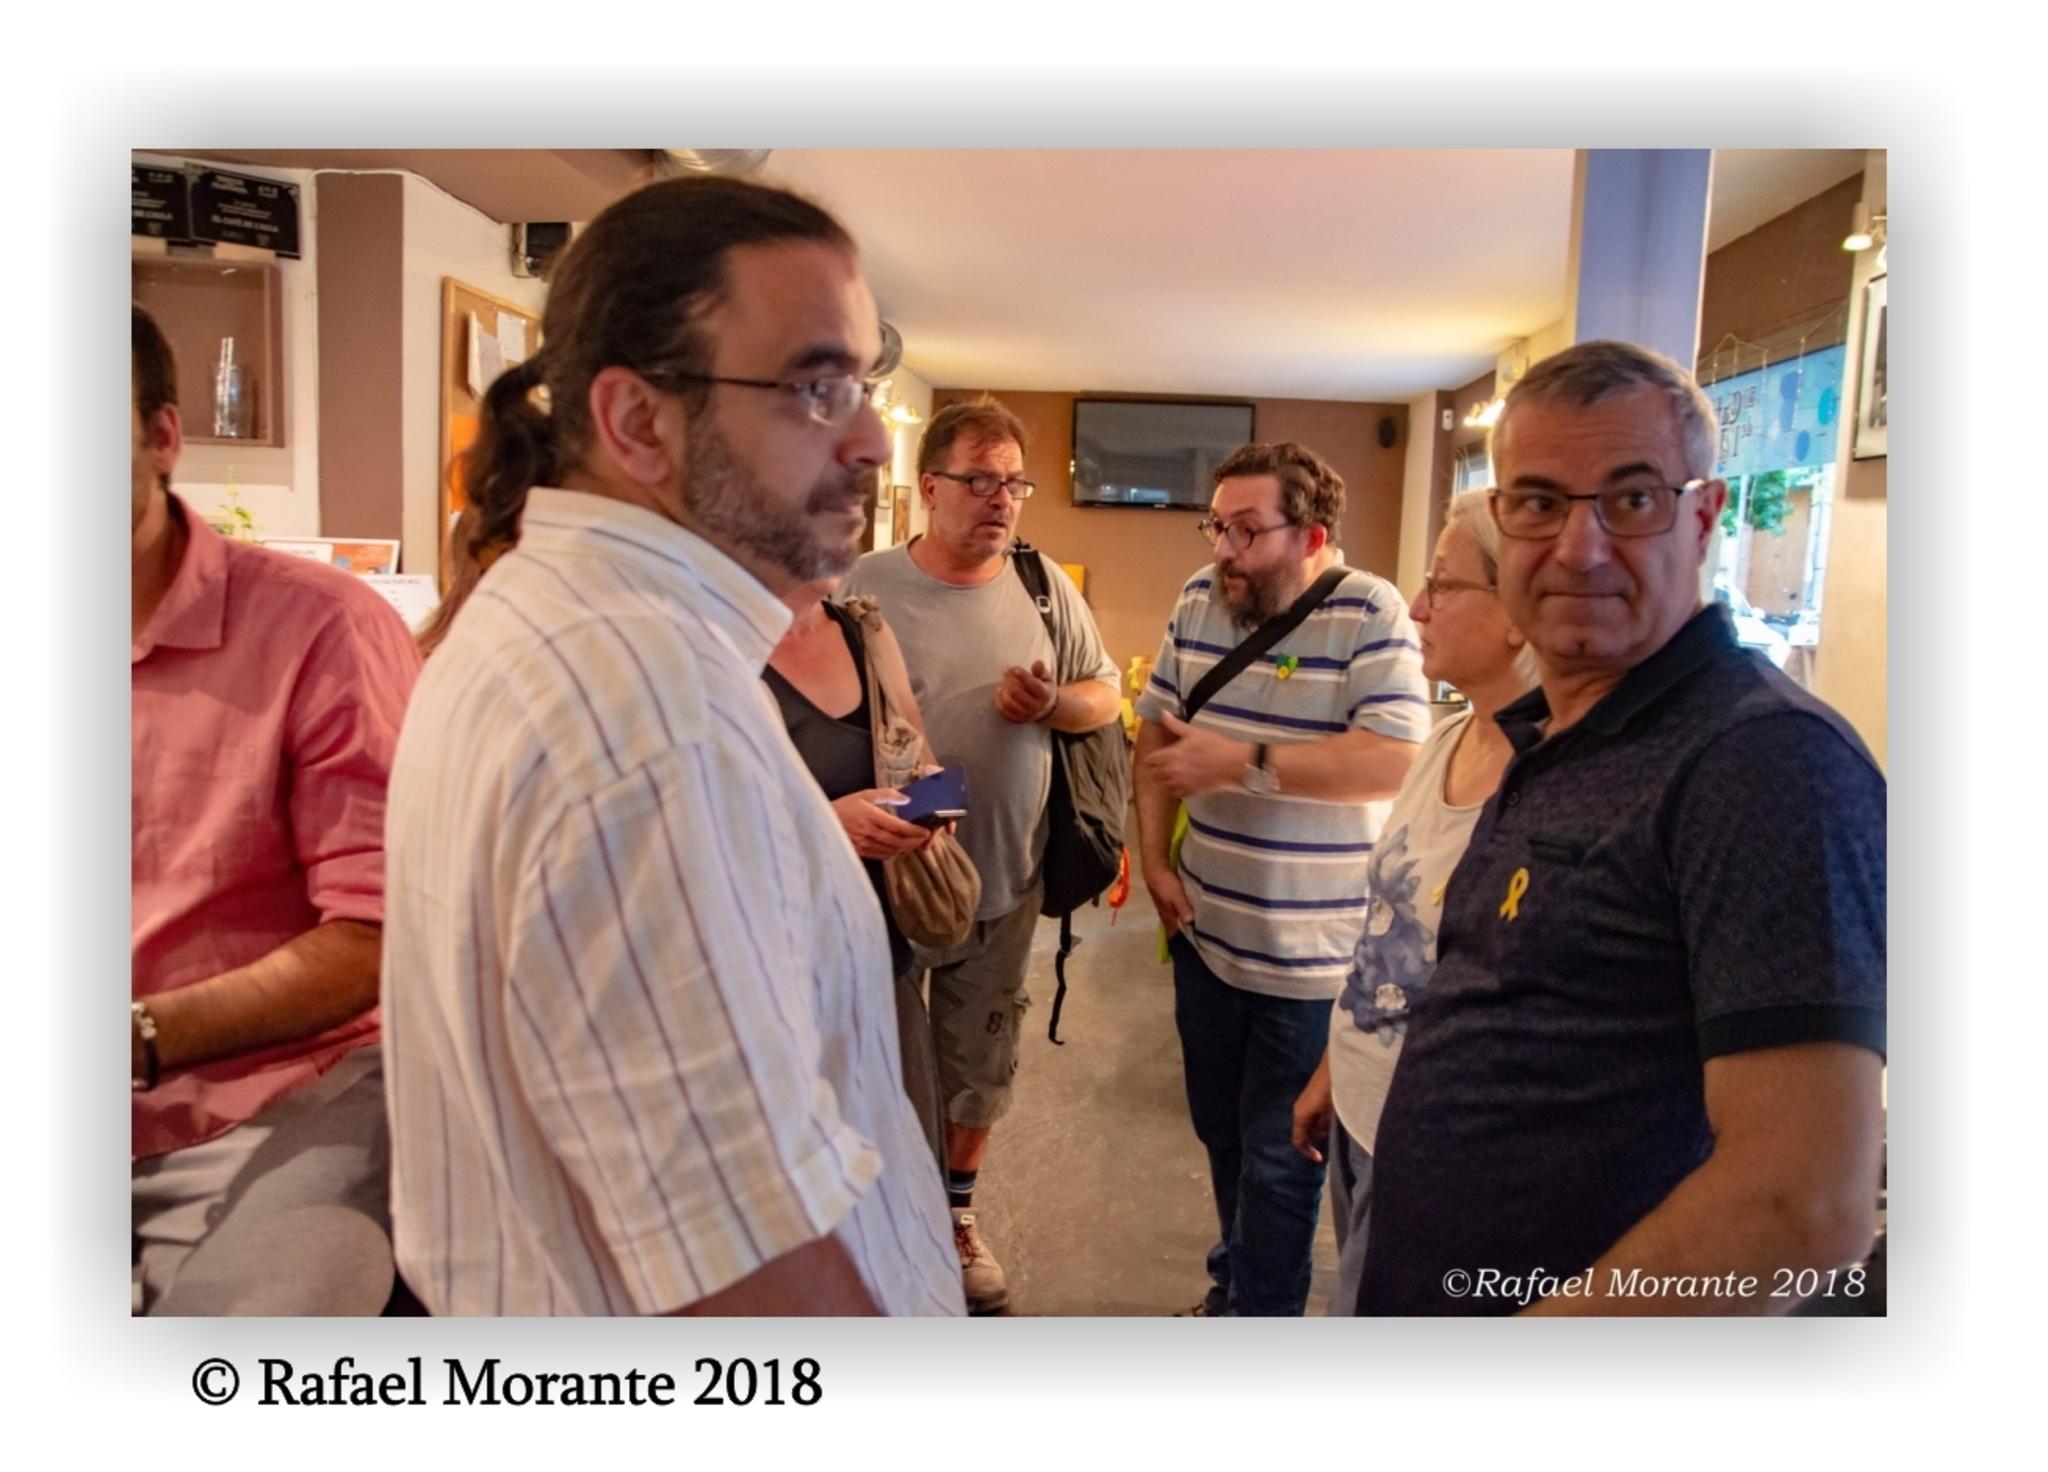  Rafael Morante 2018